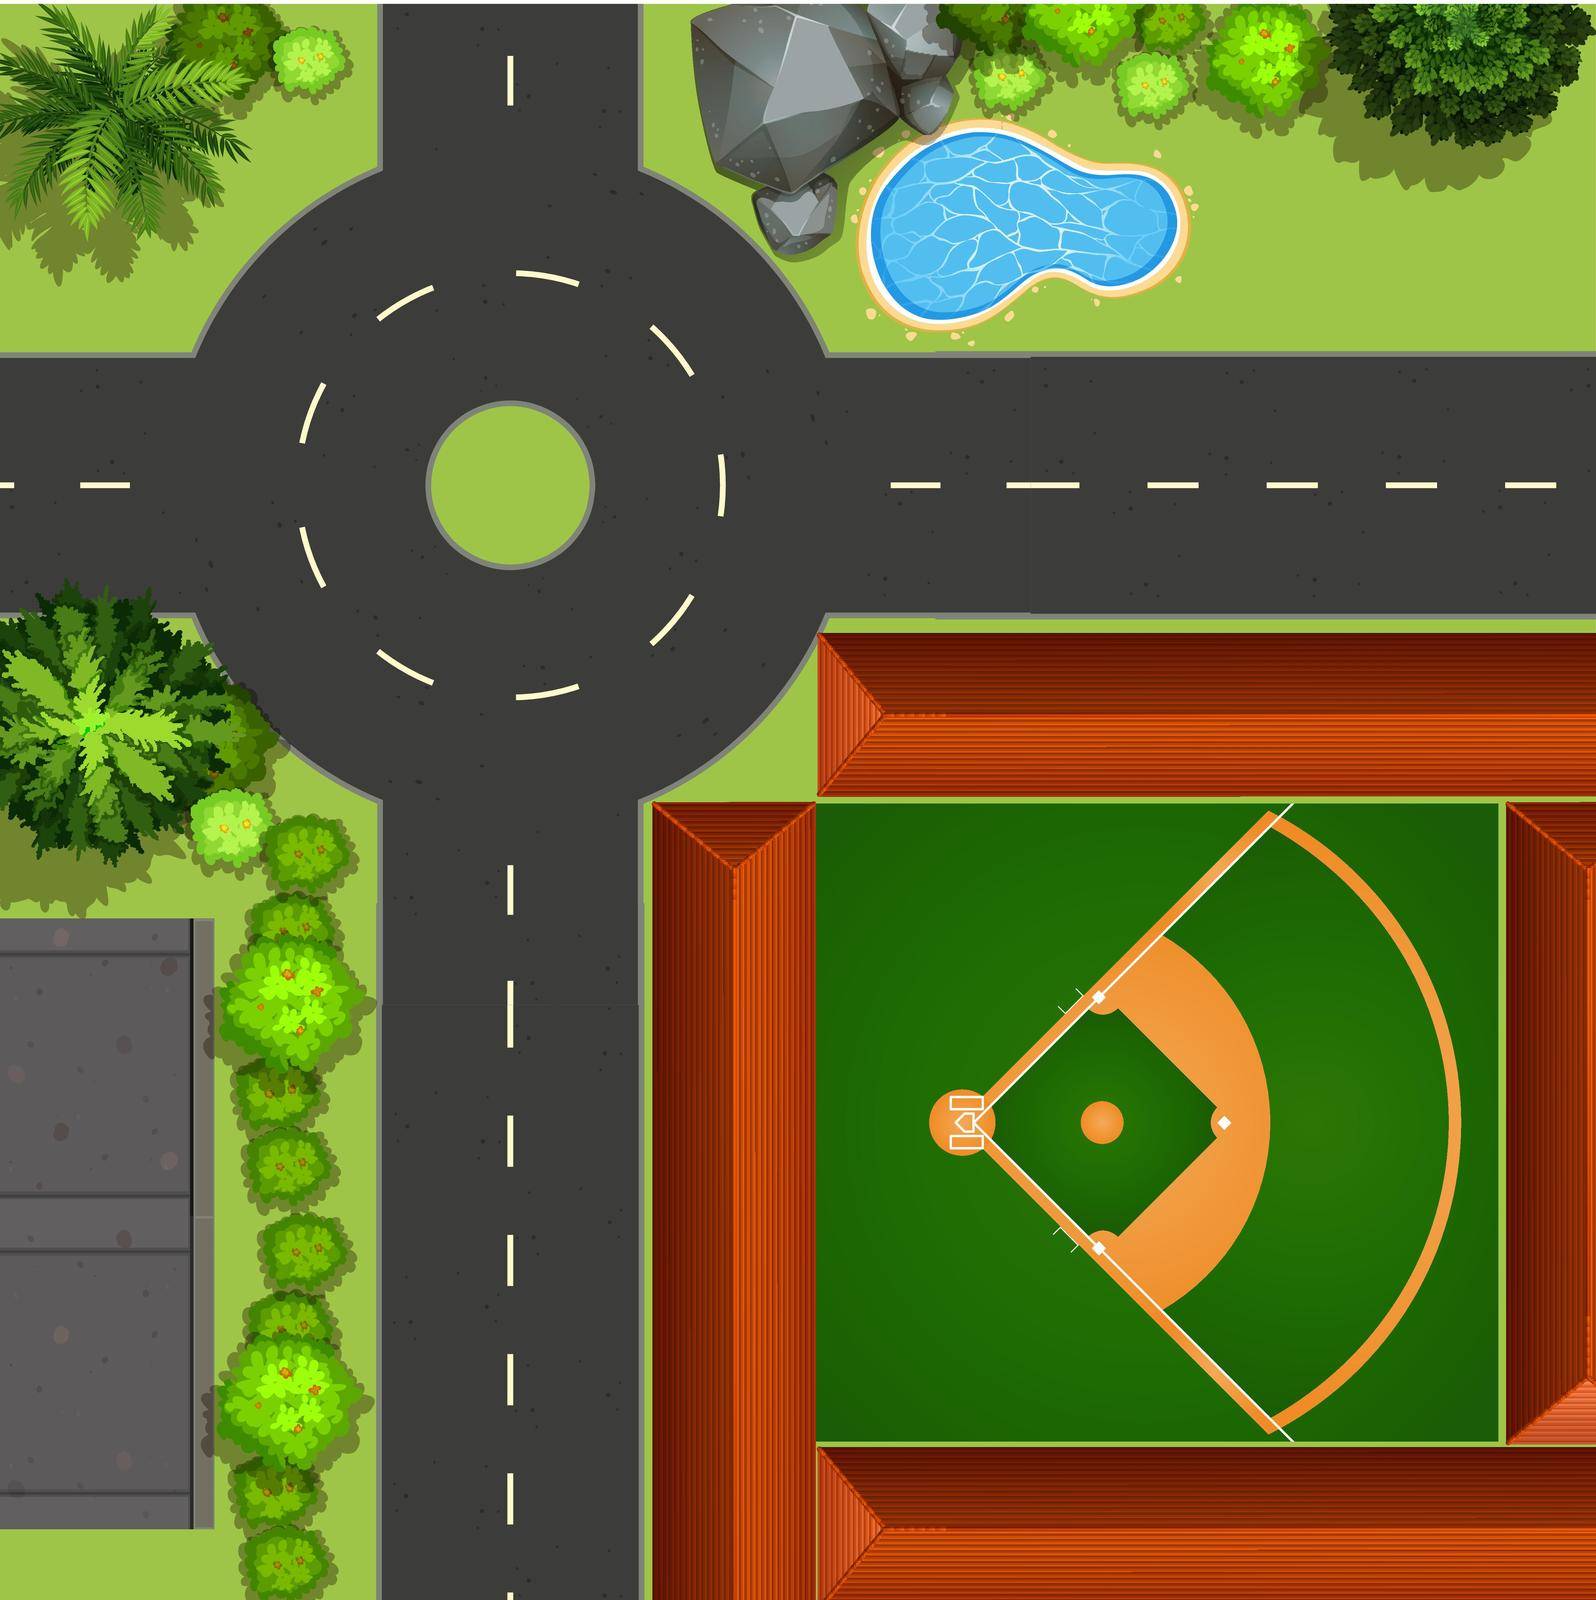 Baseball field by iimages